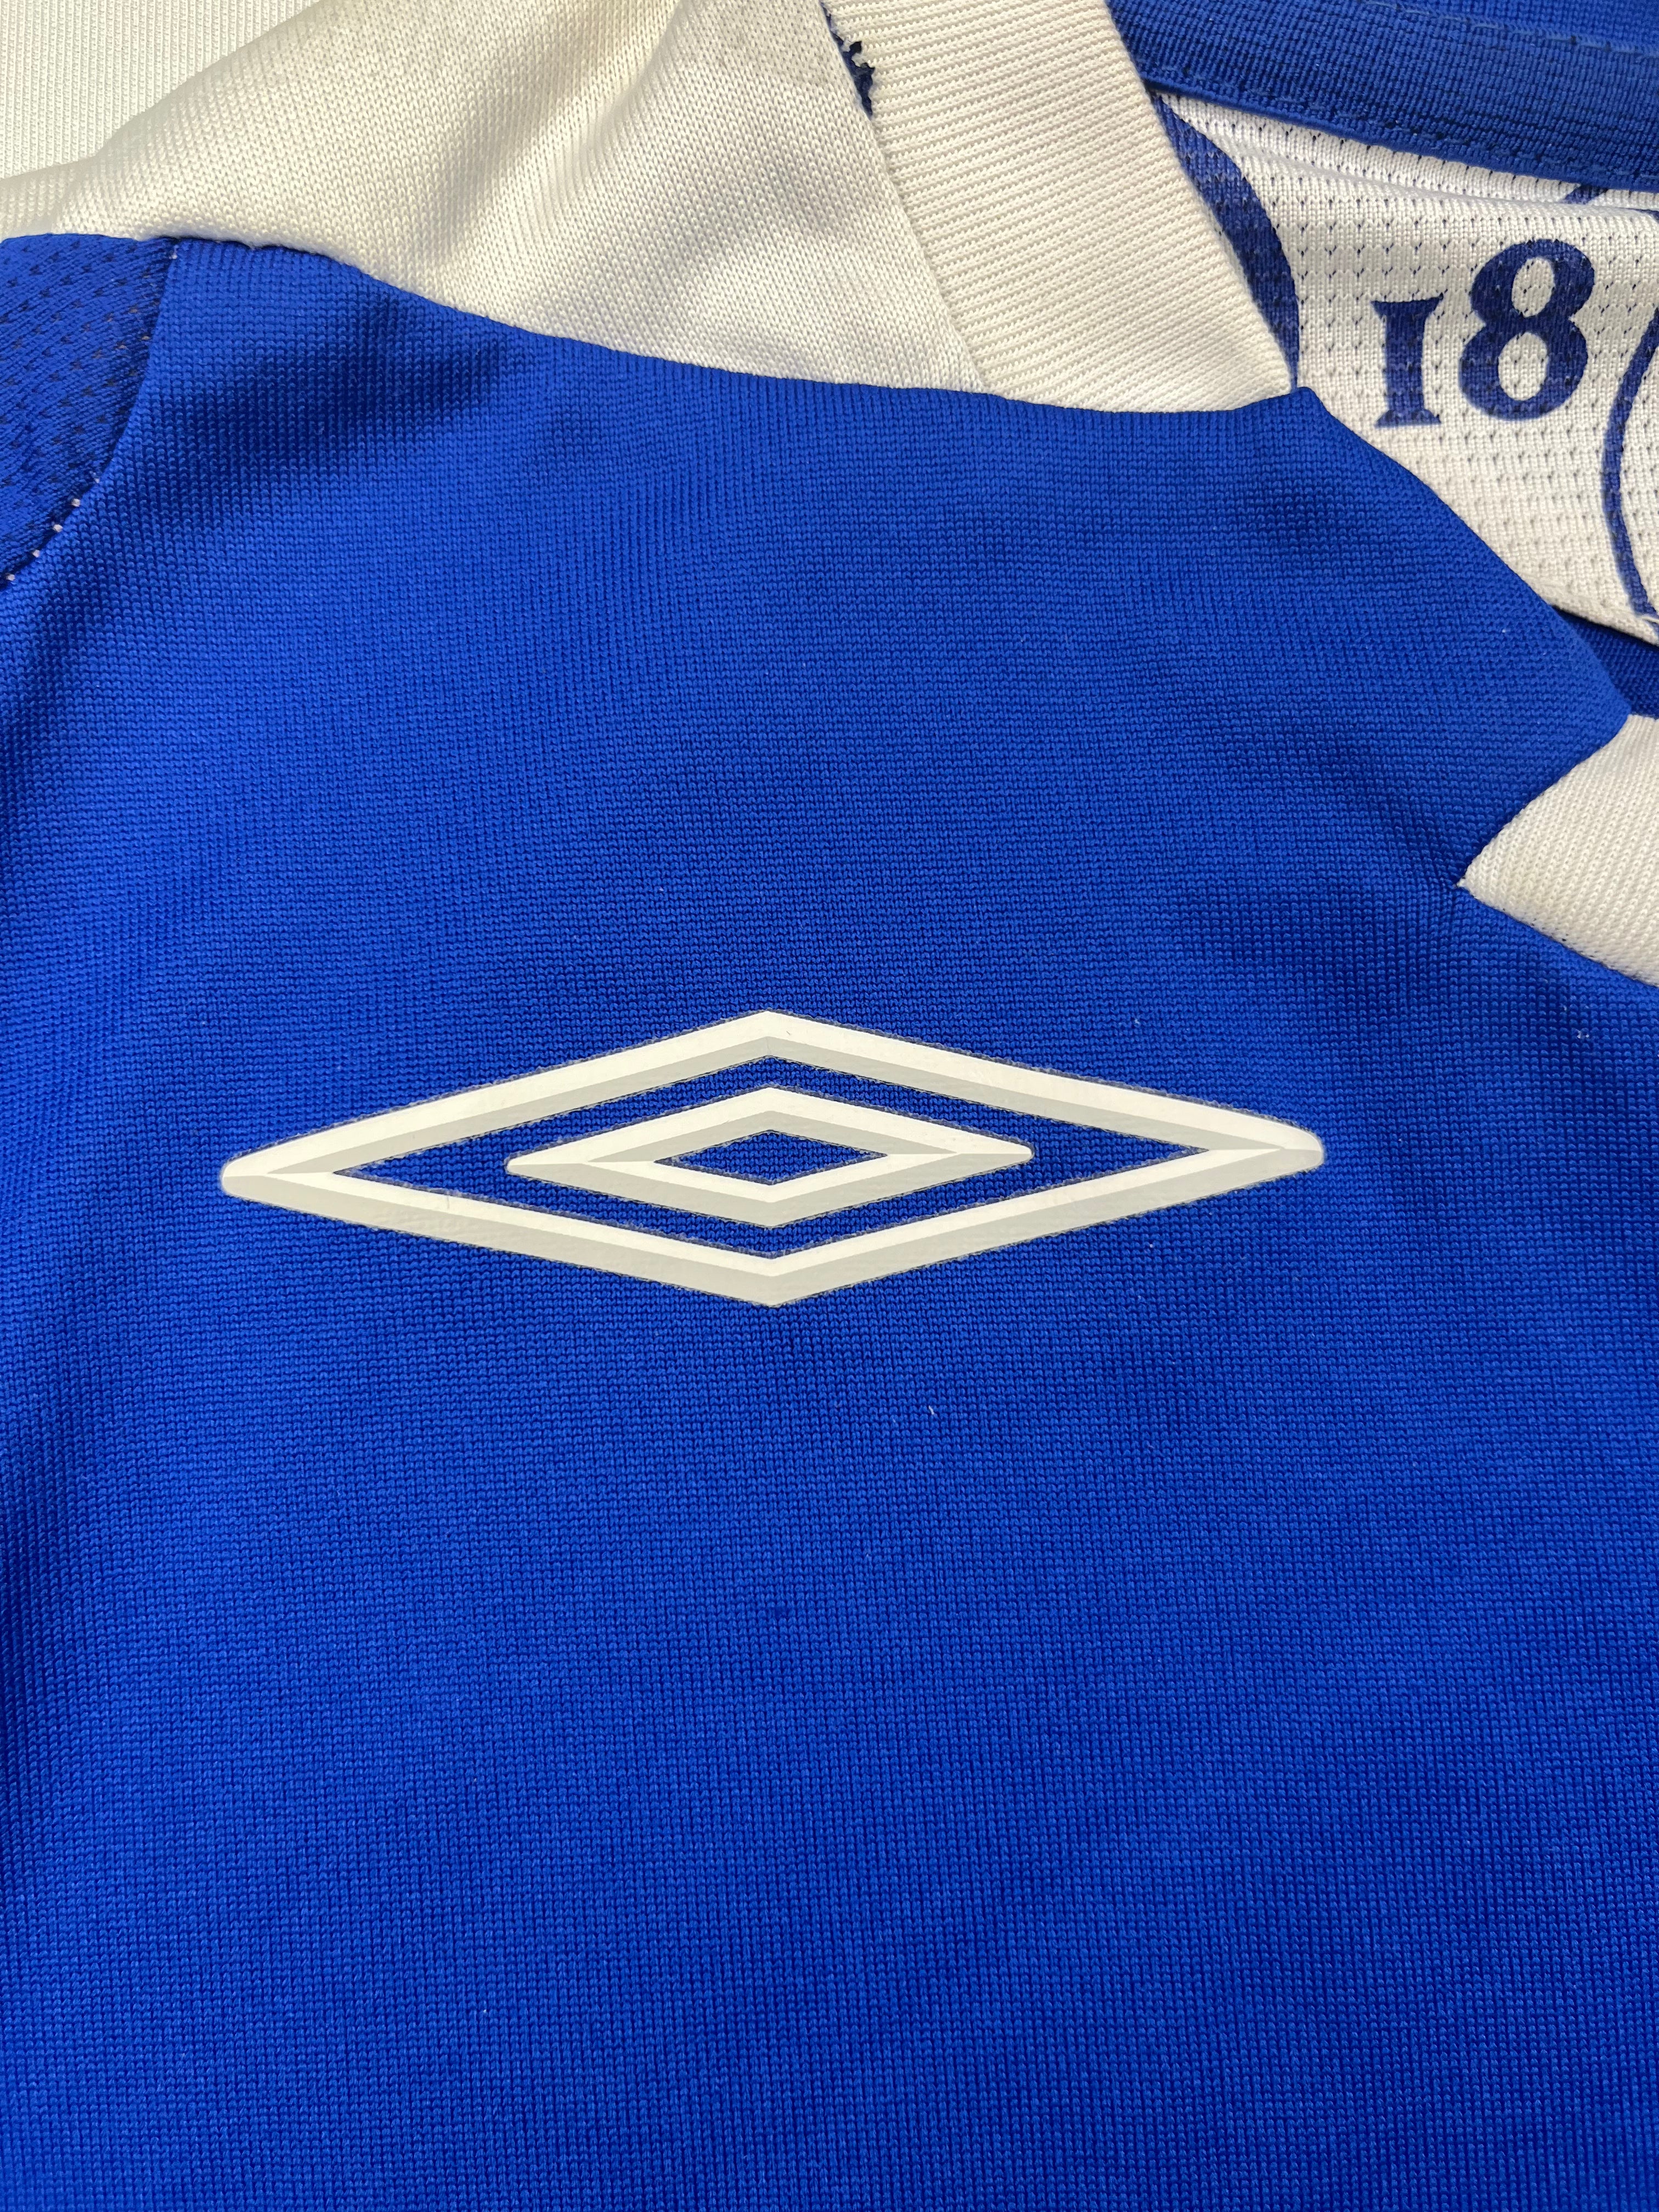 2006/07 Everton Home Shirt (S) 8.5/10